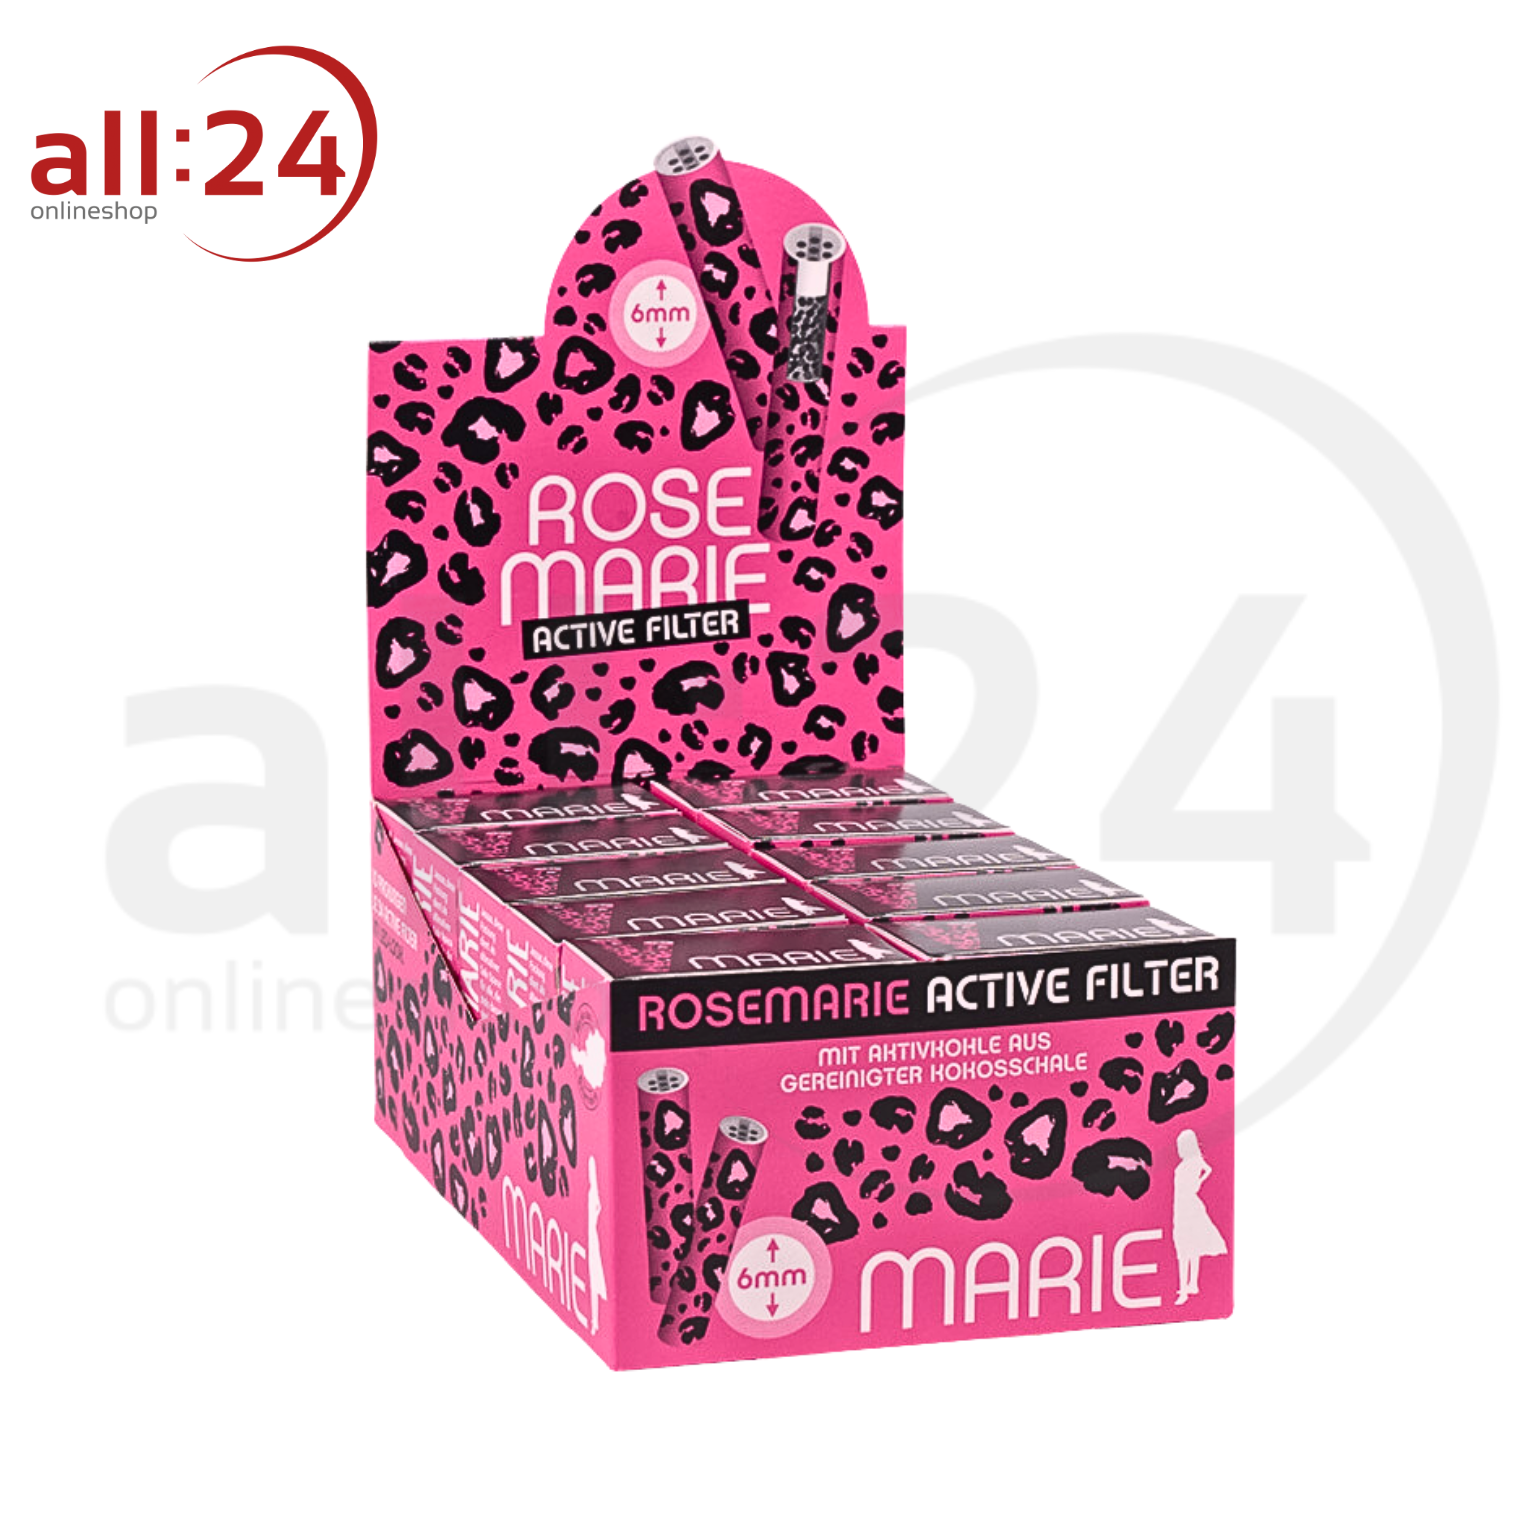 MARIE Rosemarie Active Filter 6mm - Box mit 34 Aktivkohlefiltern 